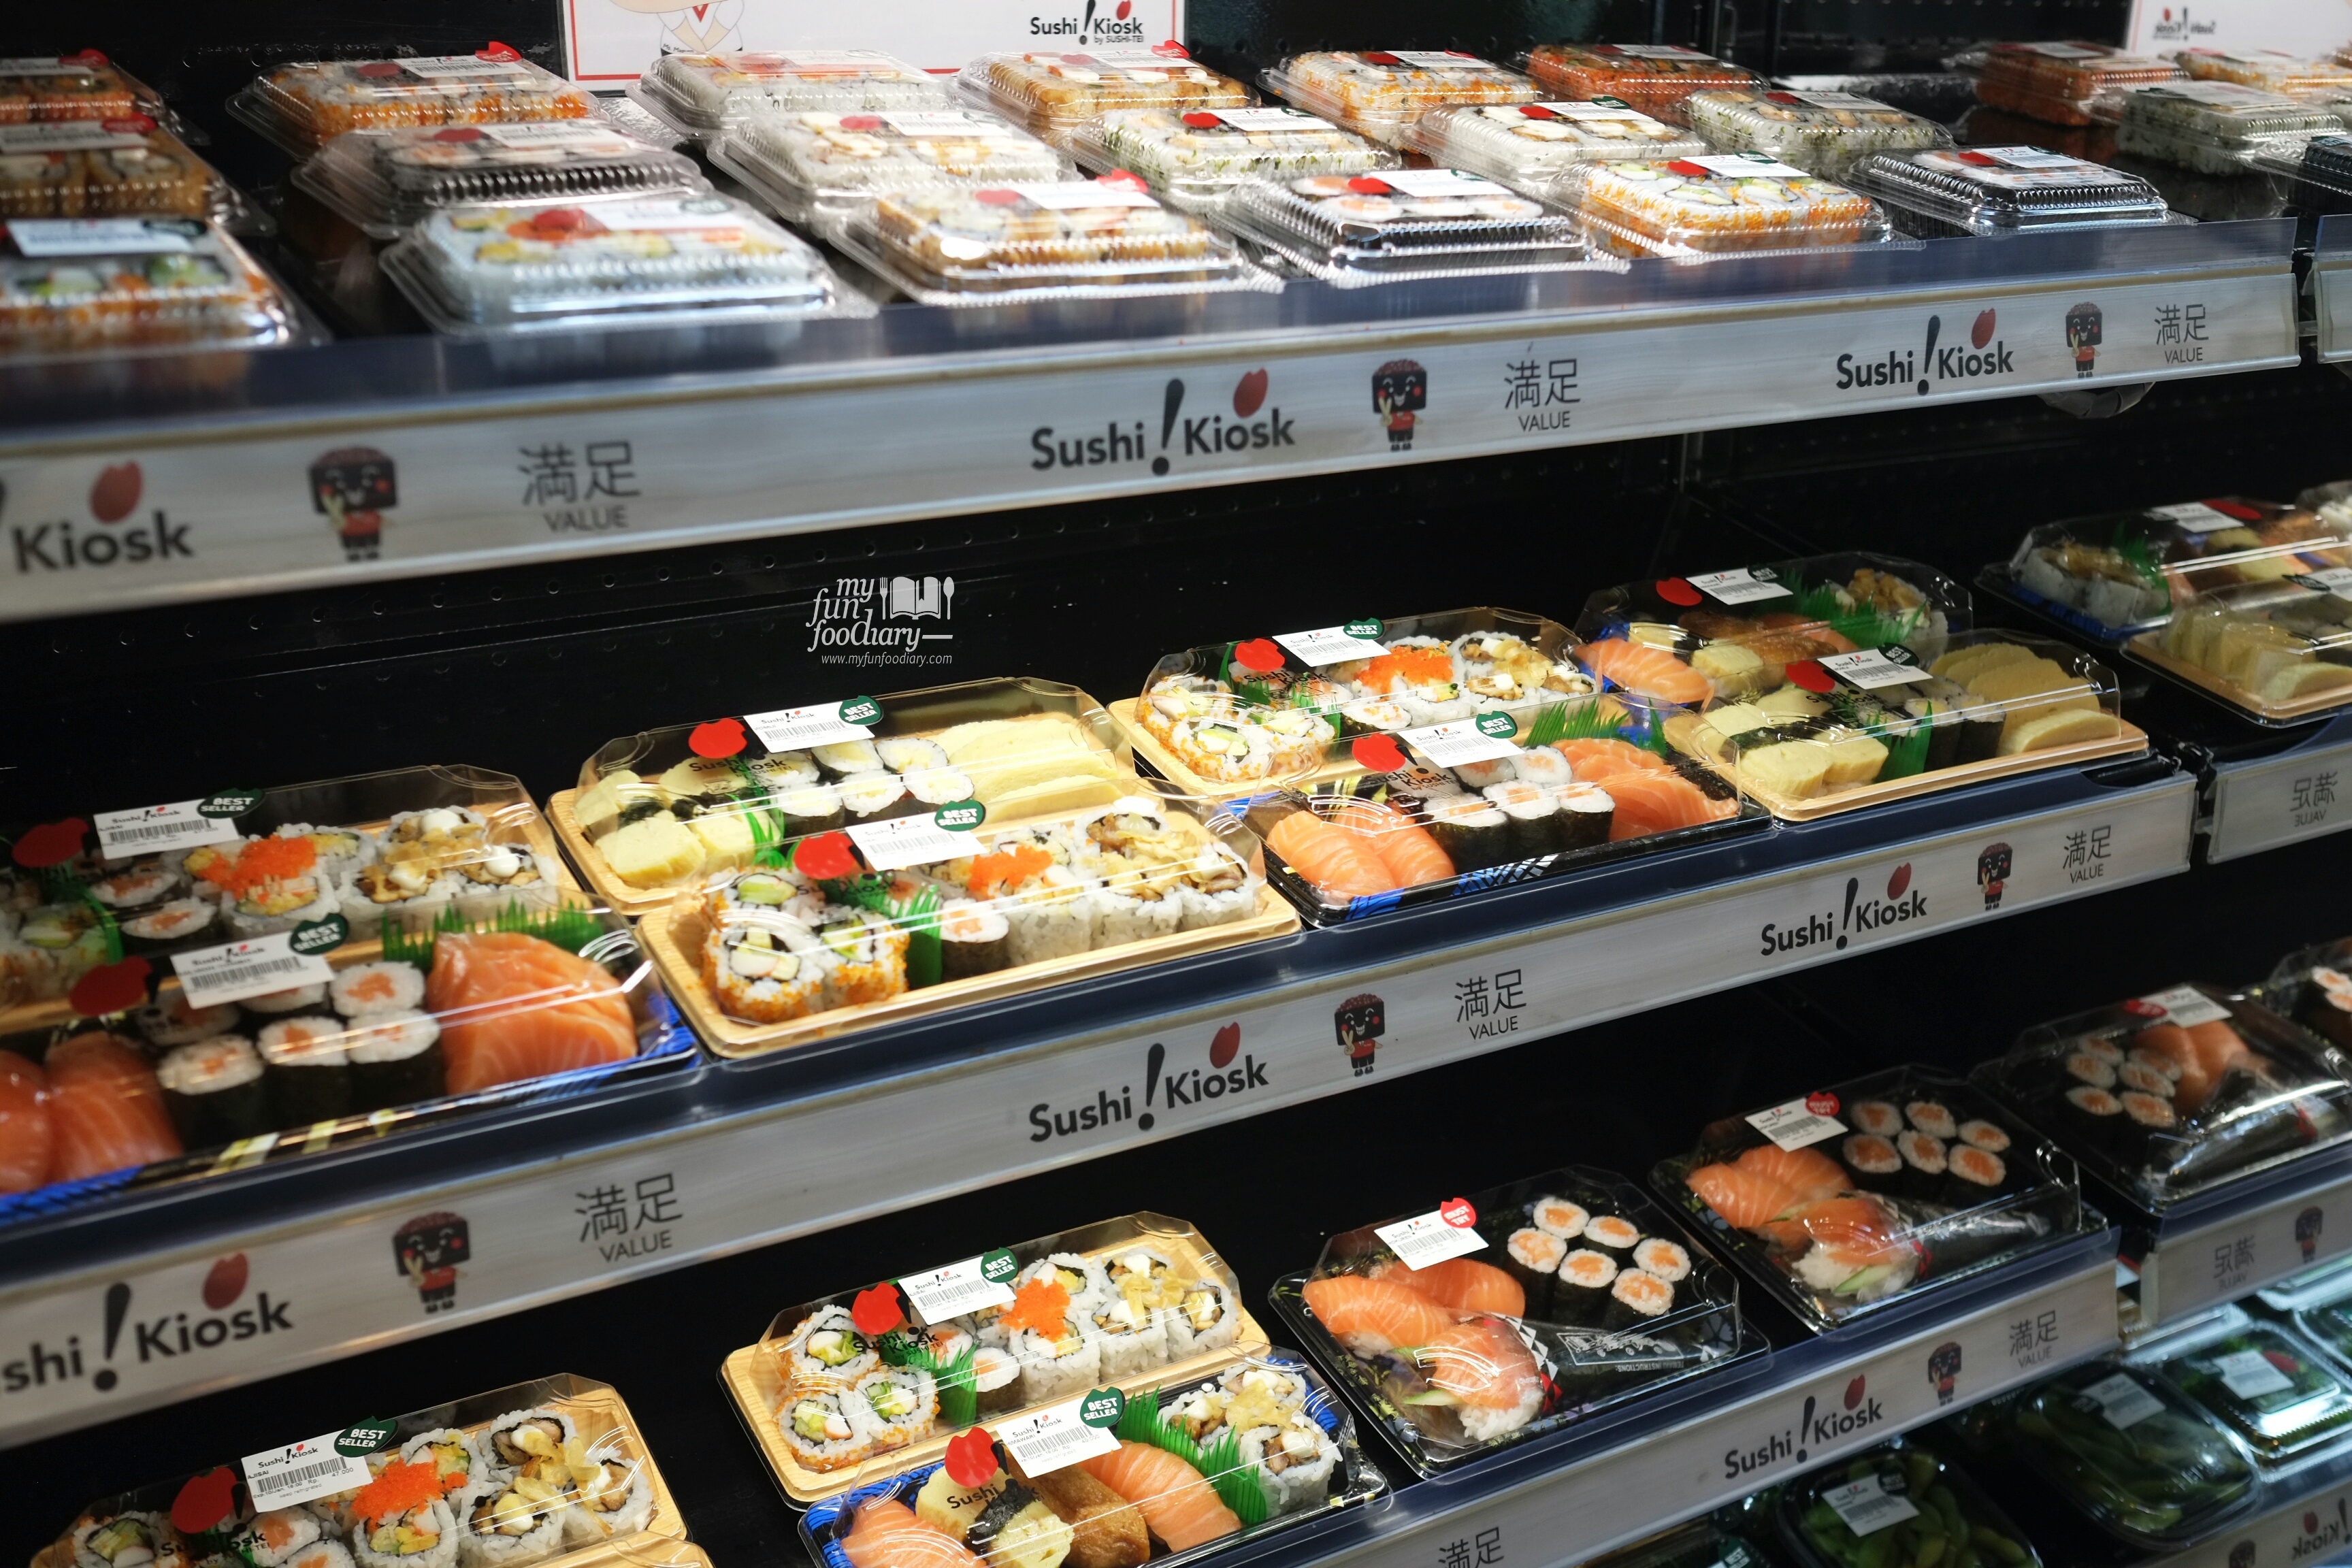 Rack Display Sushi Kiosk by Sushi Tei - by Myfunfoodiary